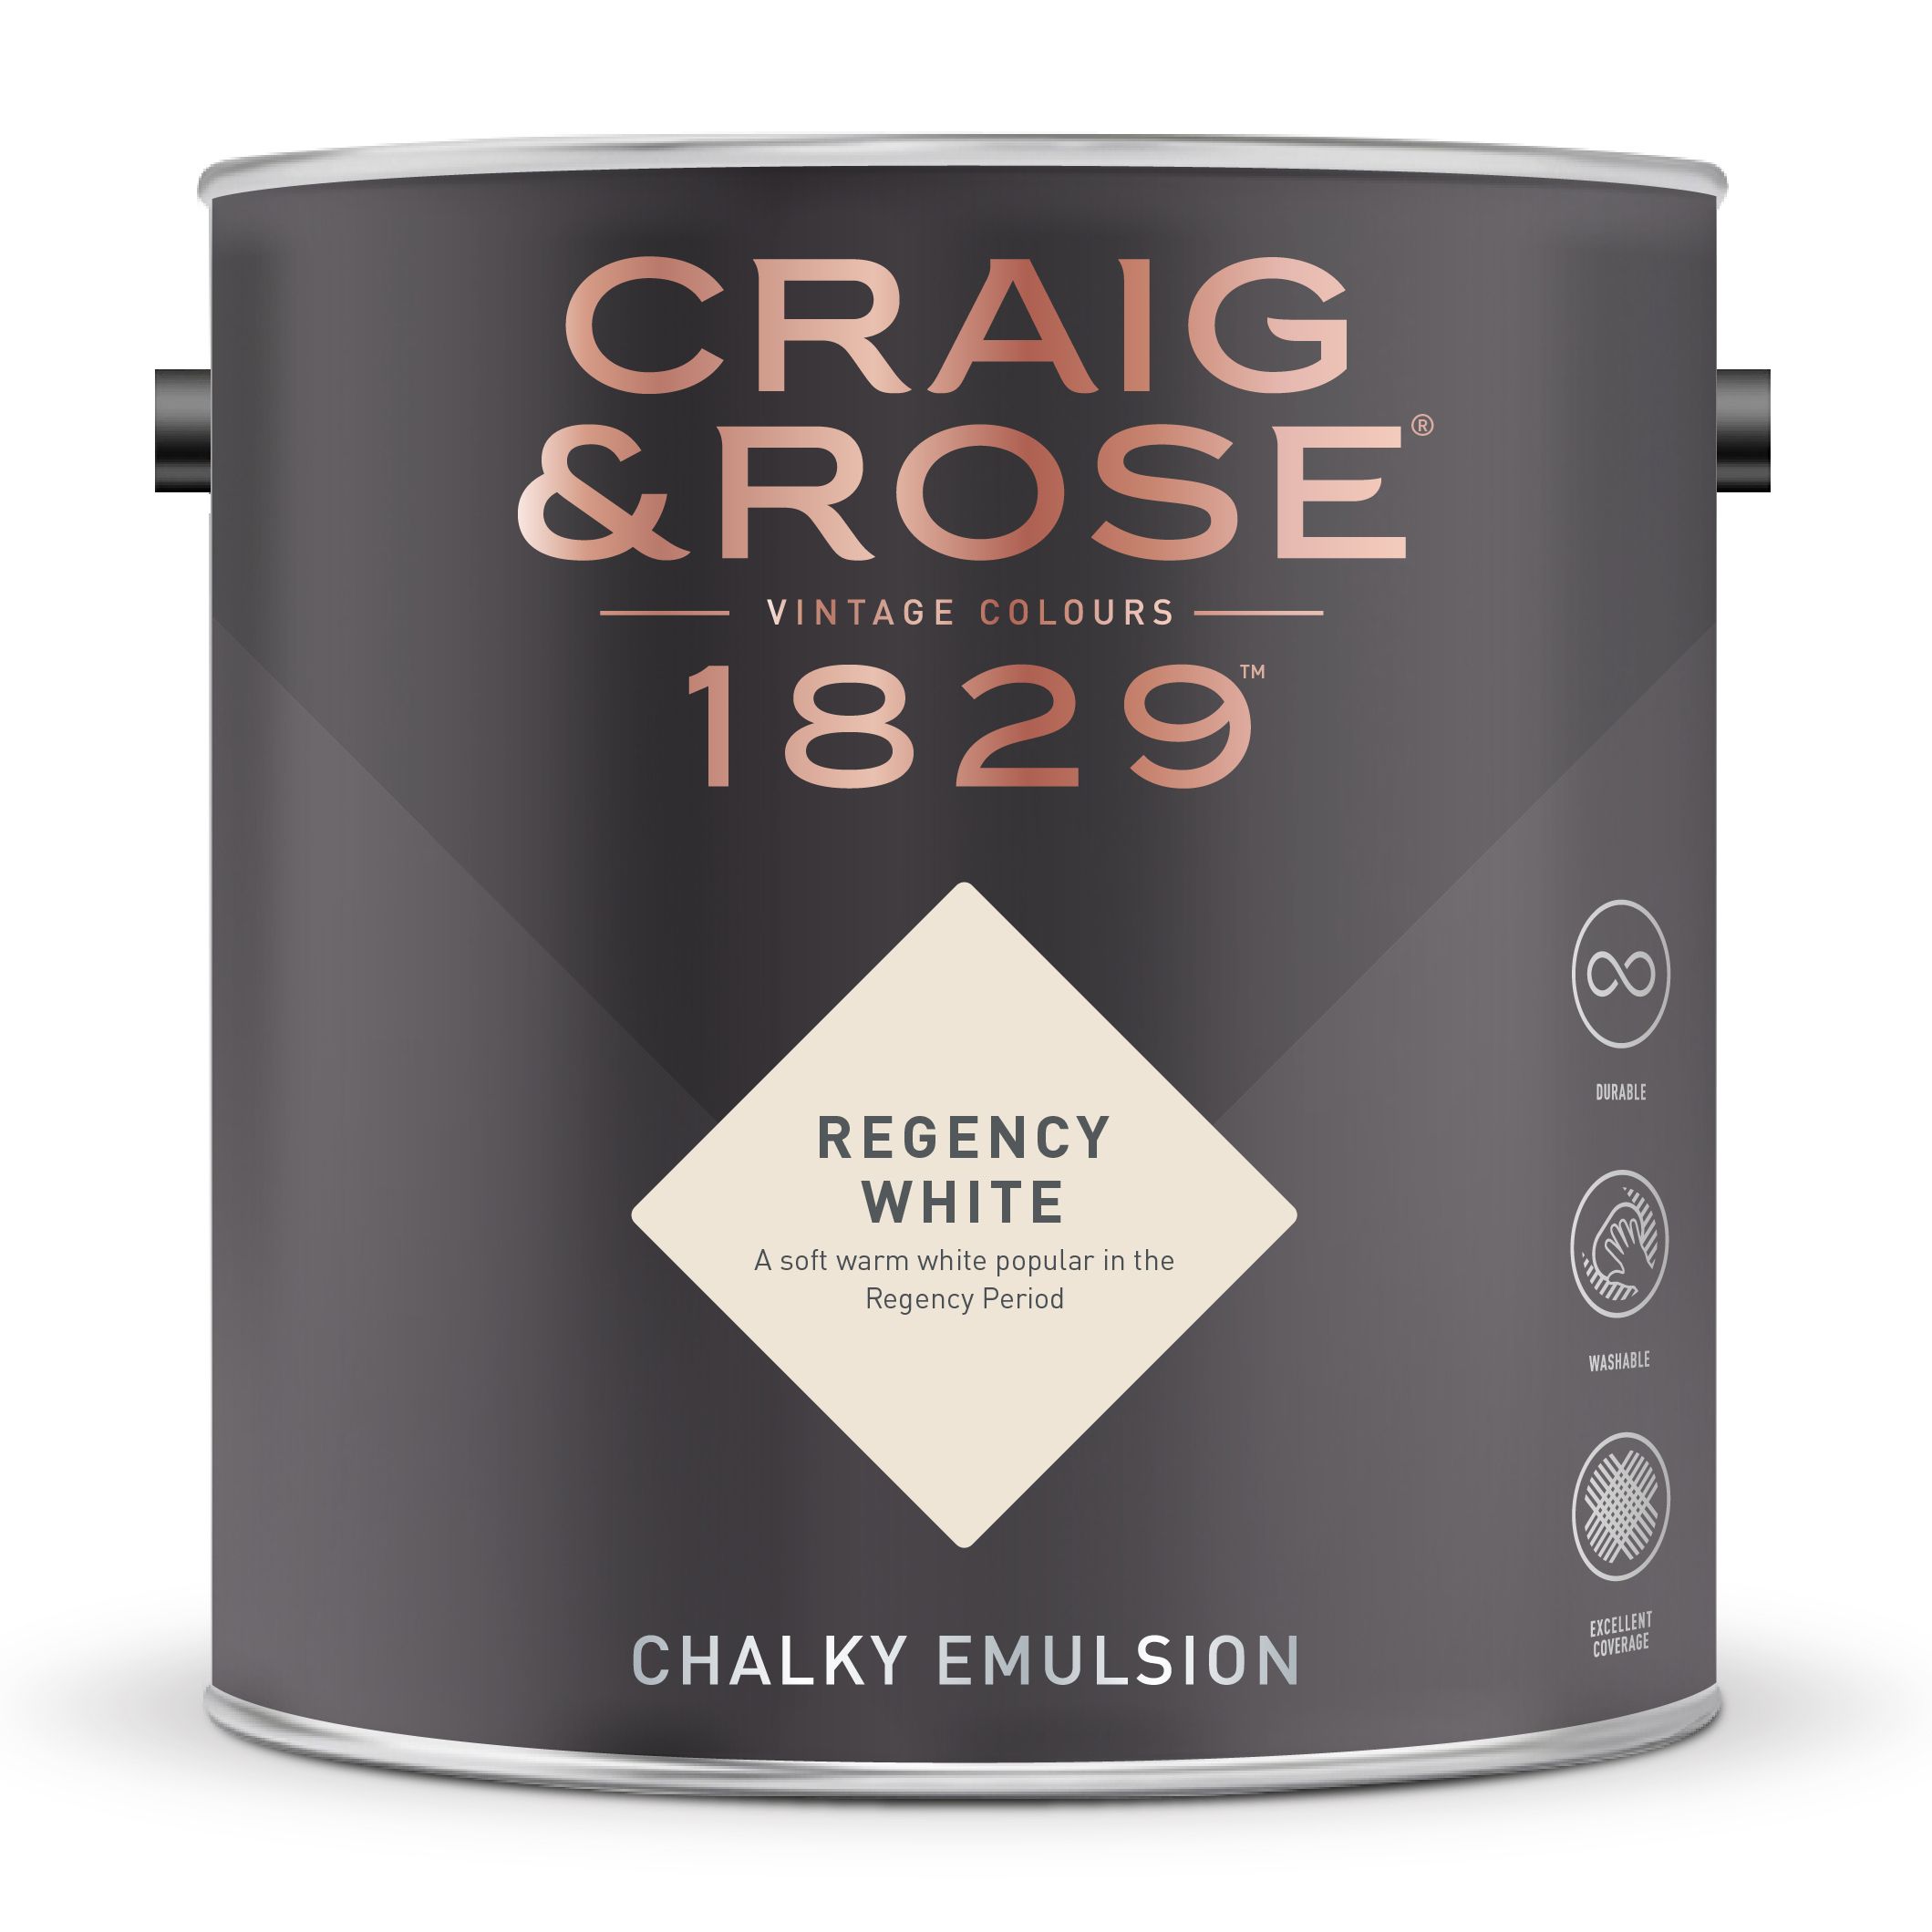 Craig & Rose 1829 Regency White Chalky Emulsion paint, 2.5L